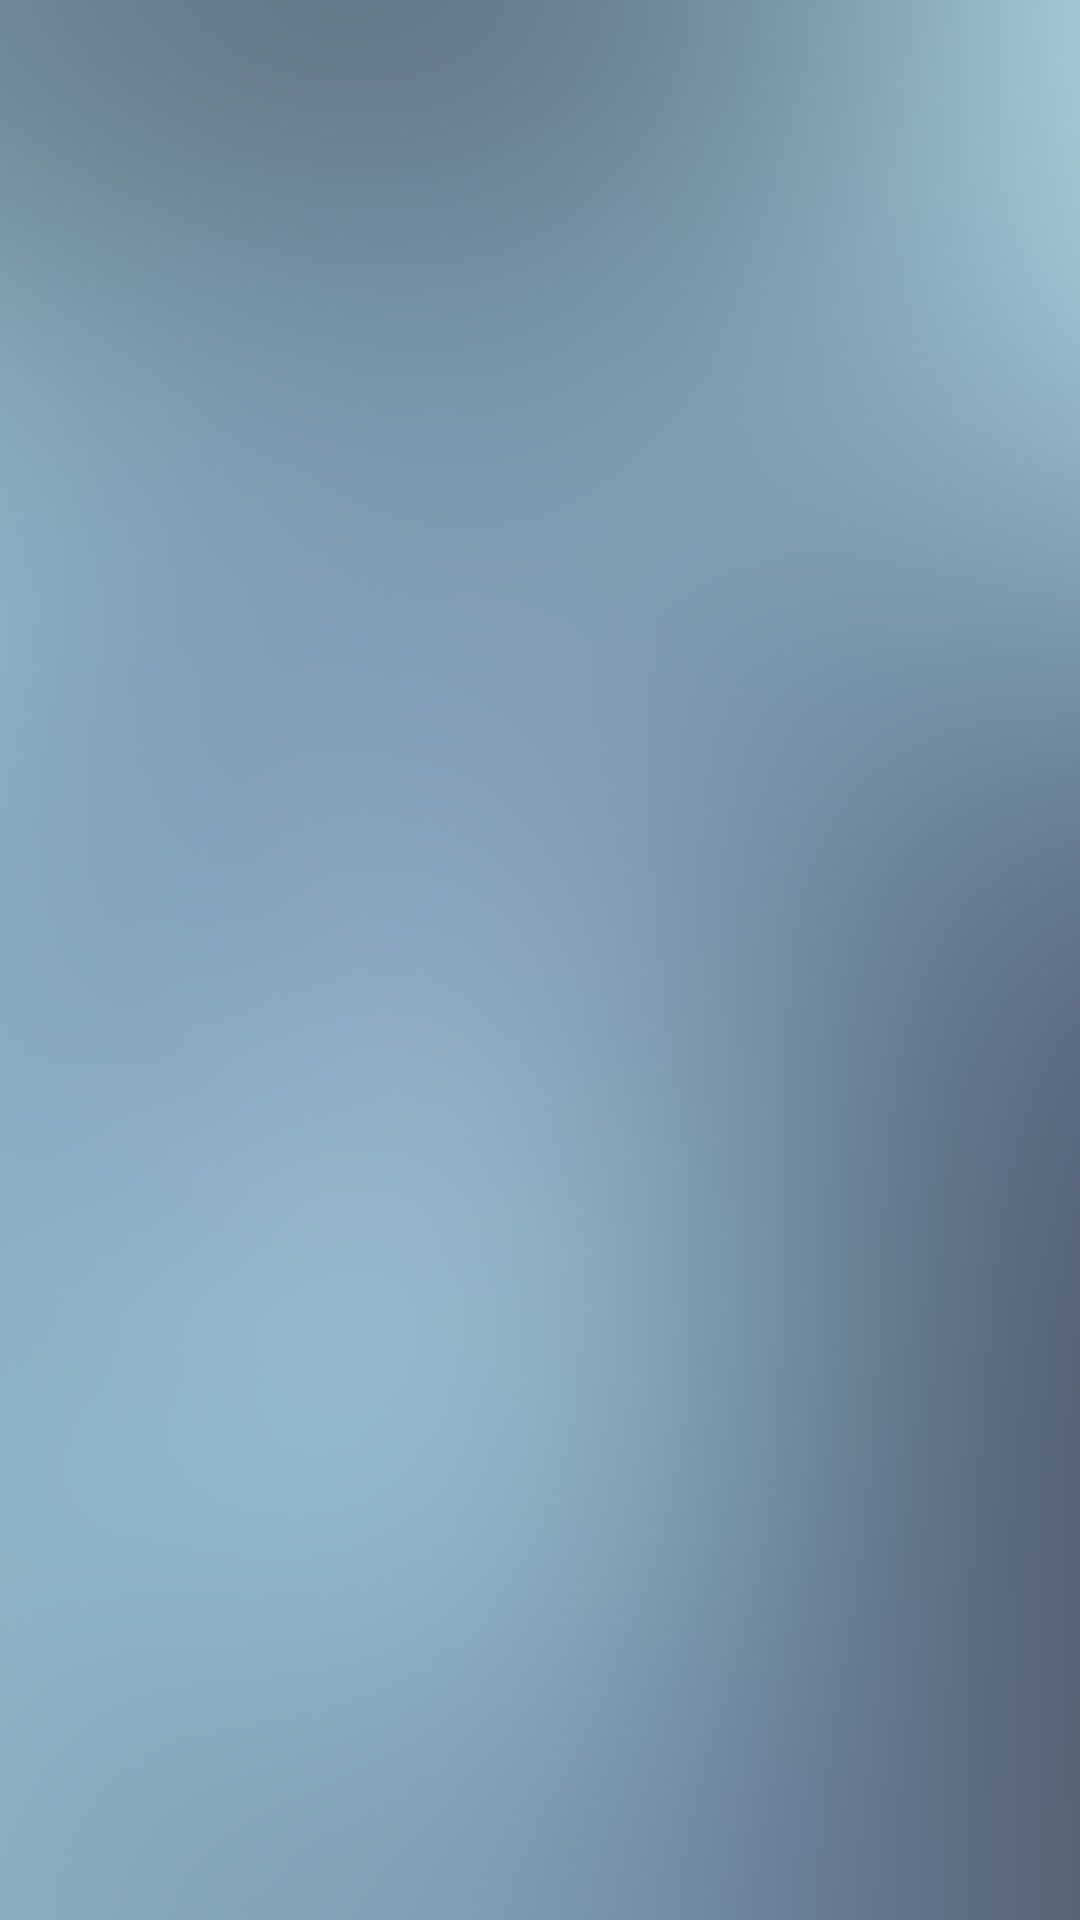 Ocean Blue Gradient LG Android Wallpaper free download